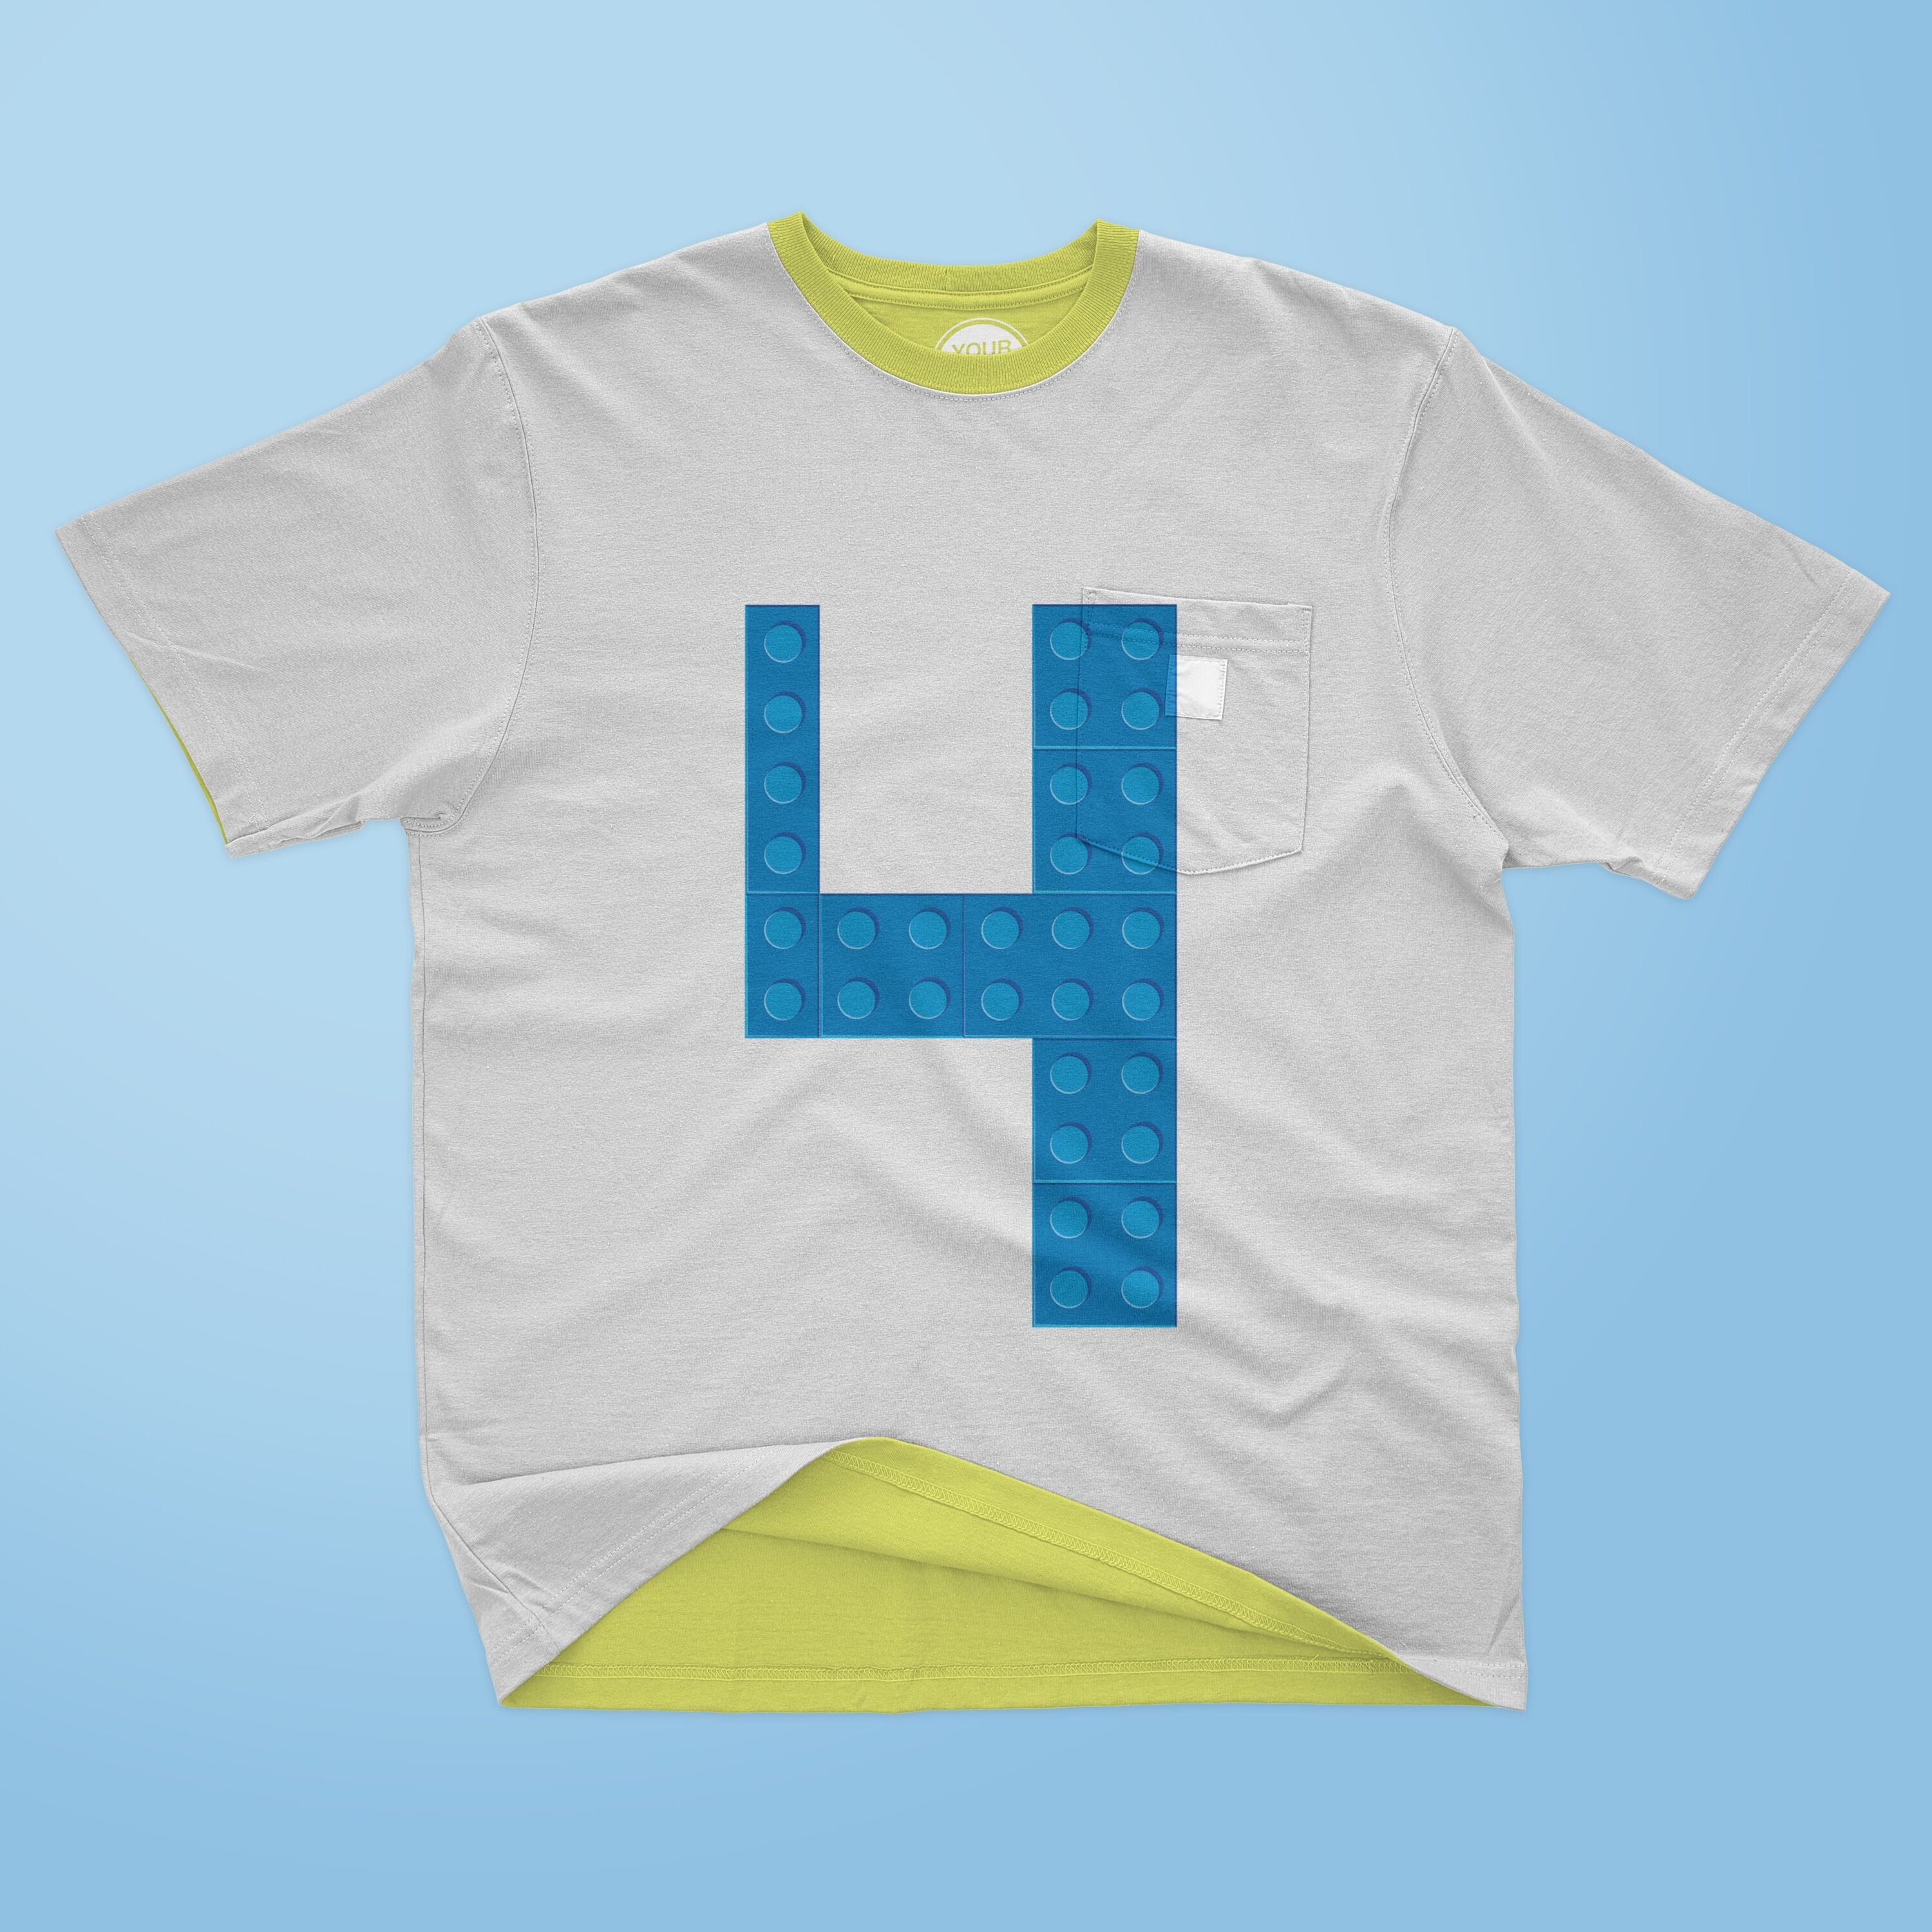 Number 4 made from blue lego bricks - t-shirt design.